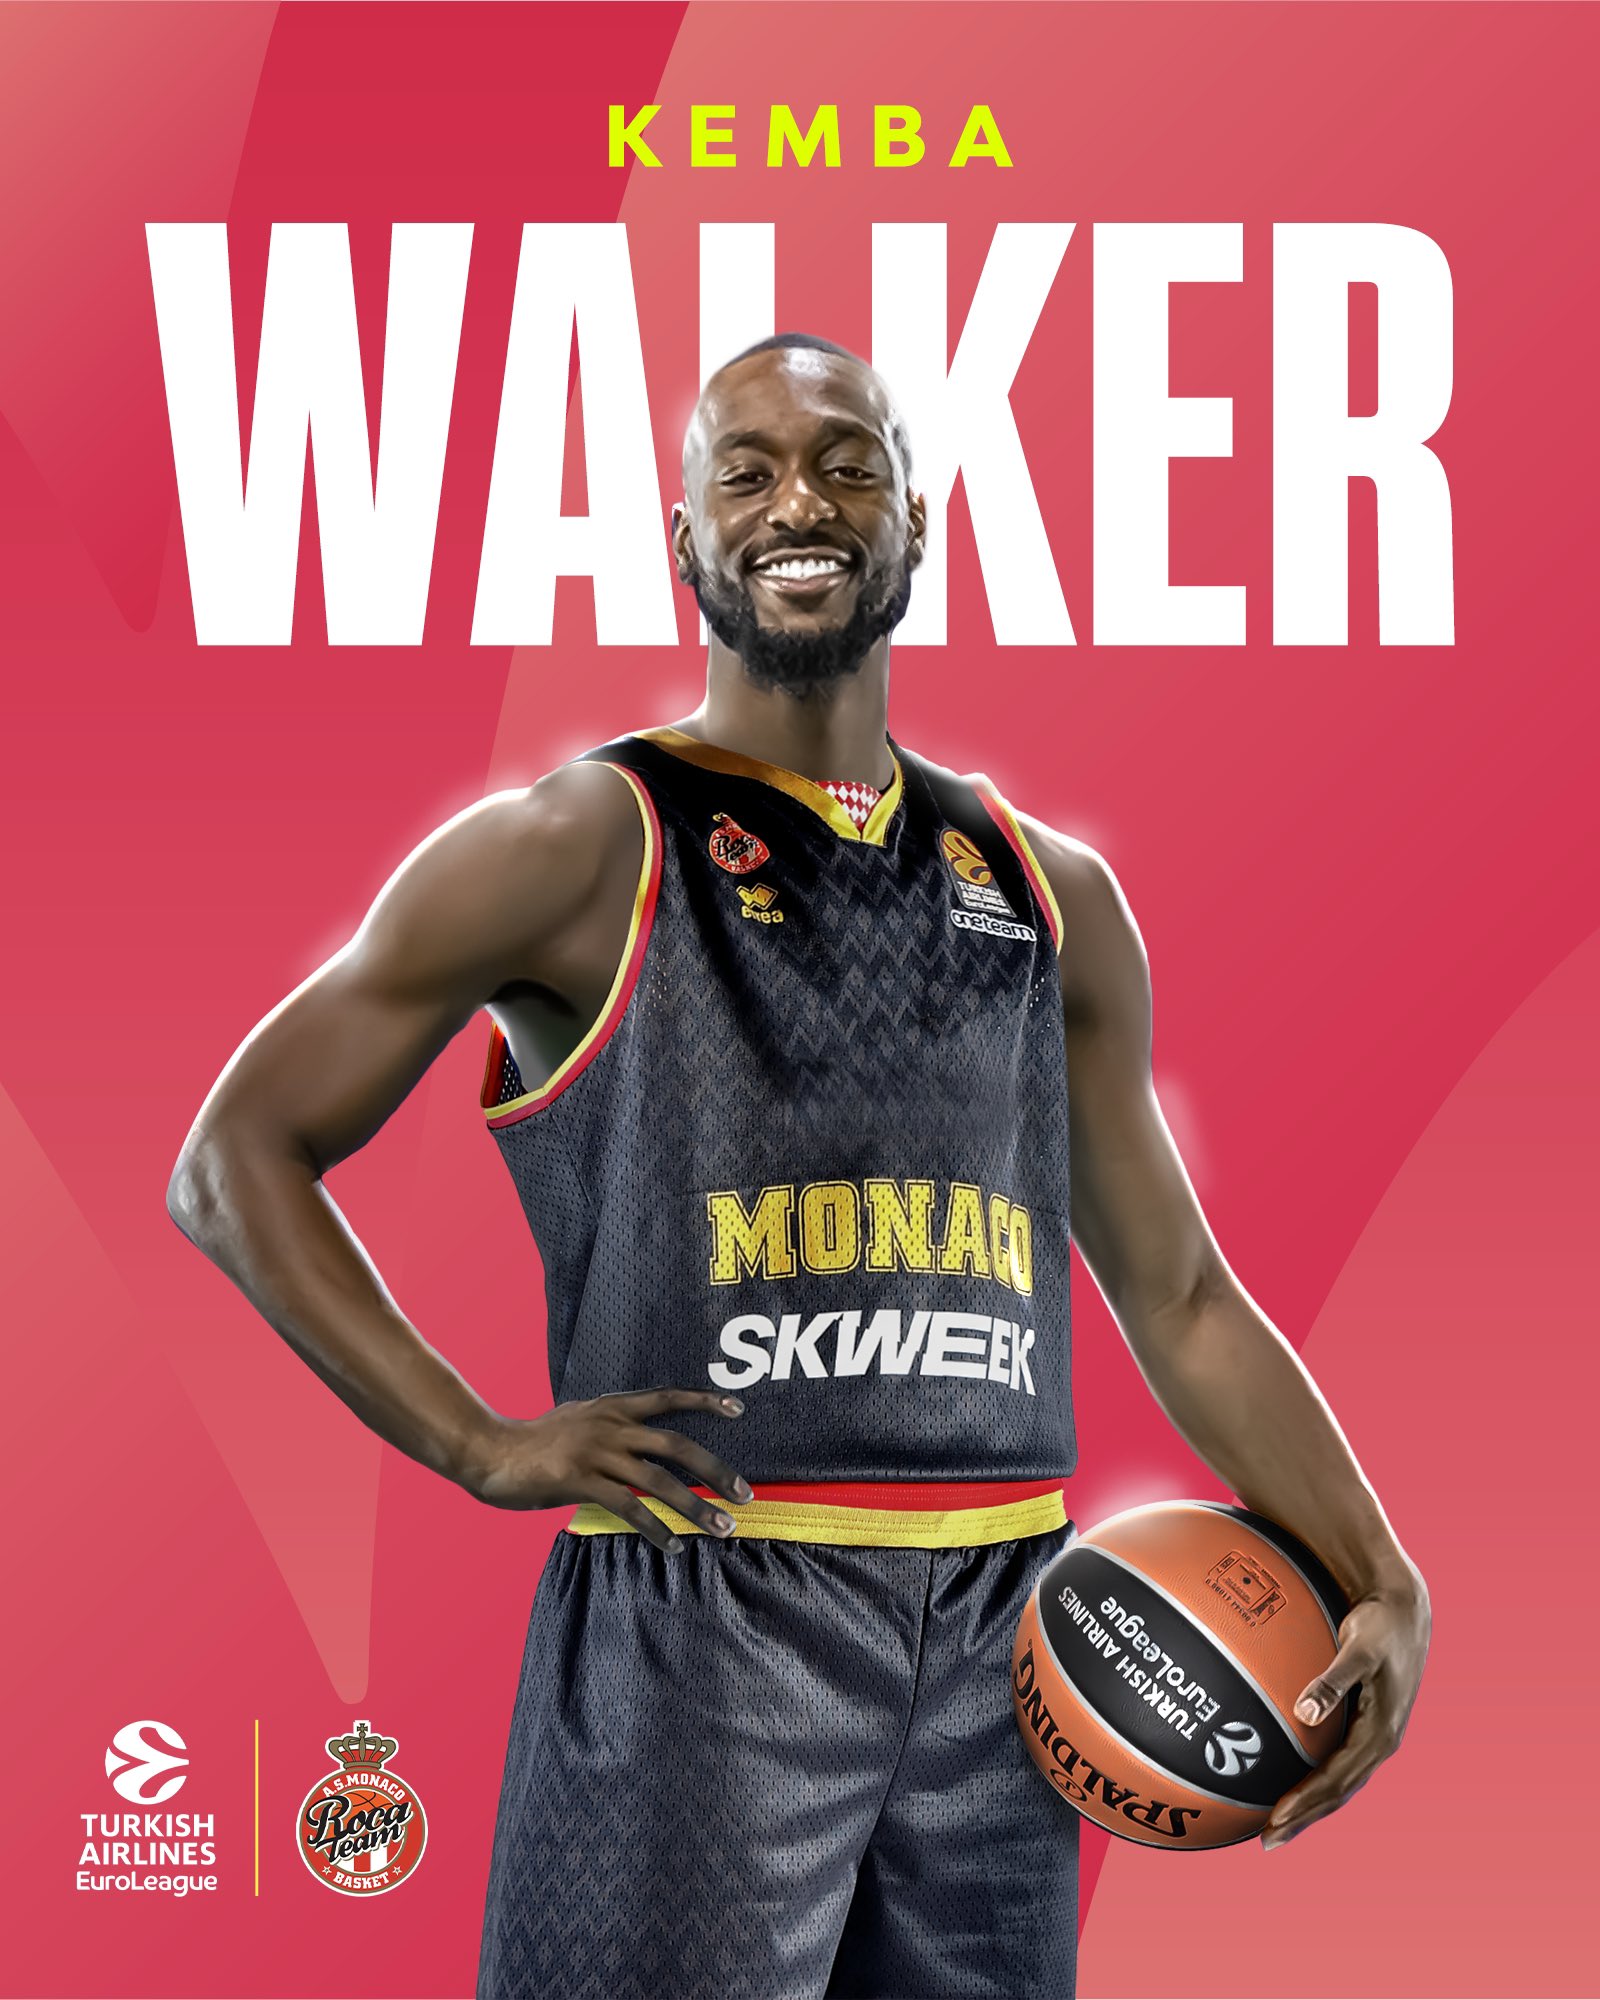 NBA Player Kemba Walker Inks Deal with European AS Monaco